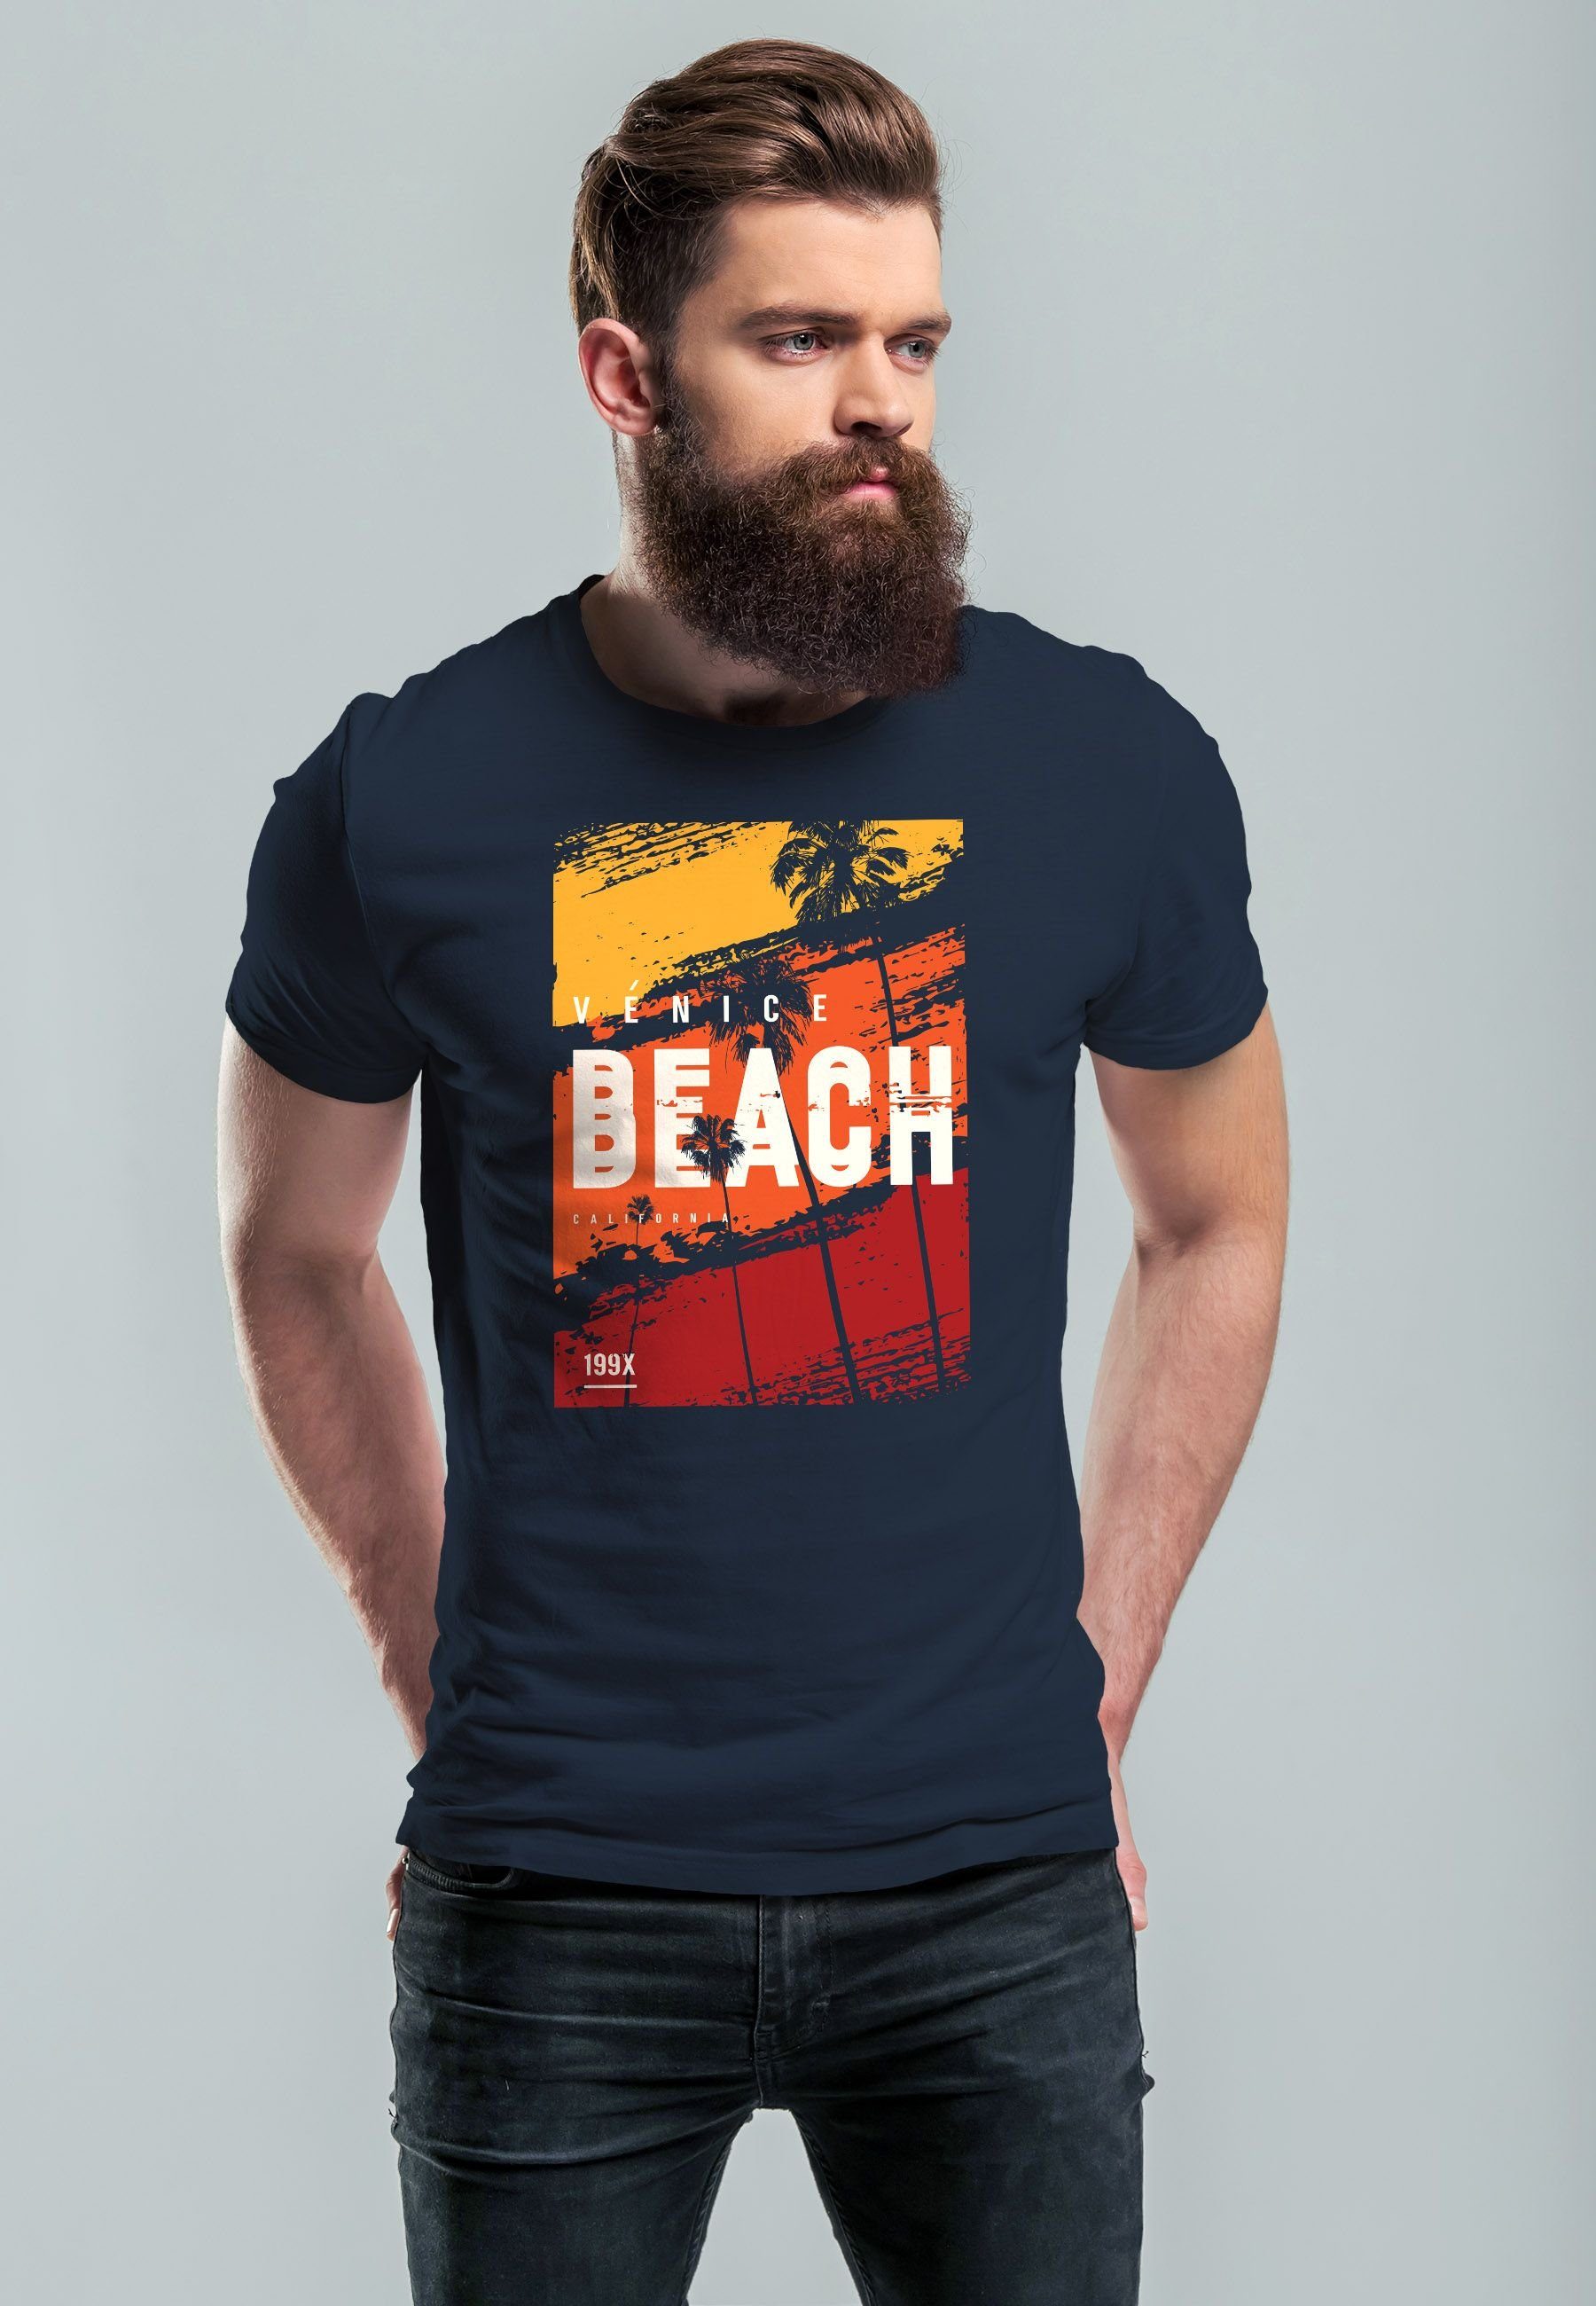 Neverless navy Sommer Motiv Strand Palme Print Surfing Beach mit T-Shirt Herren Venice Print-Shirt Aufdruck